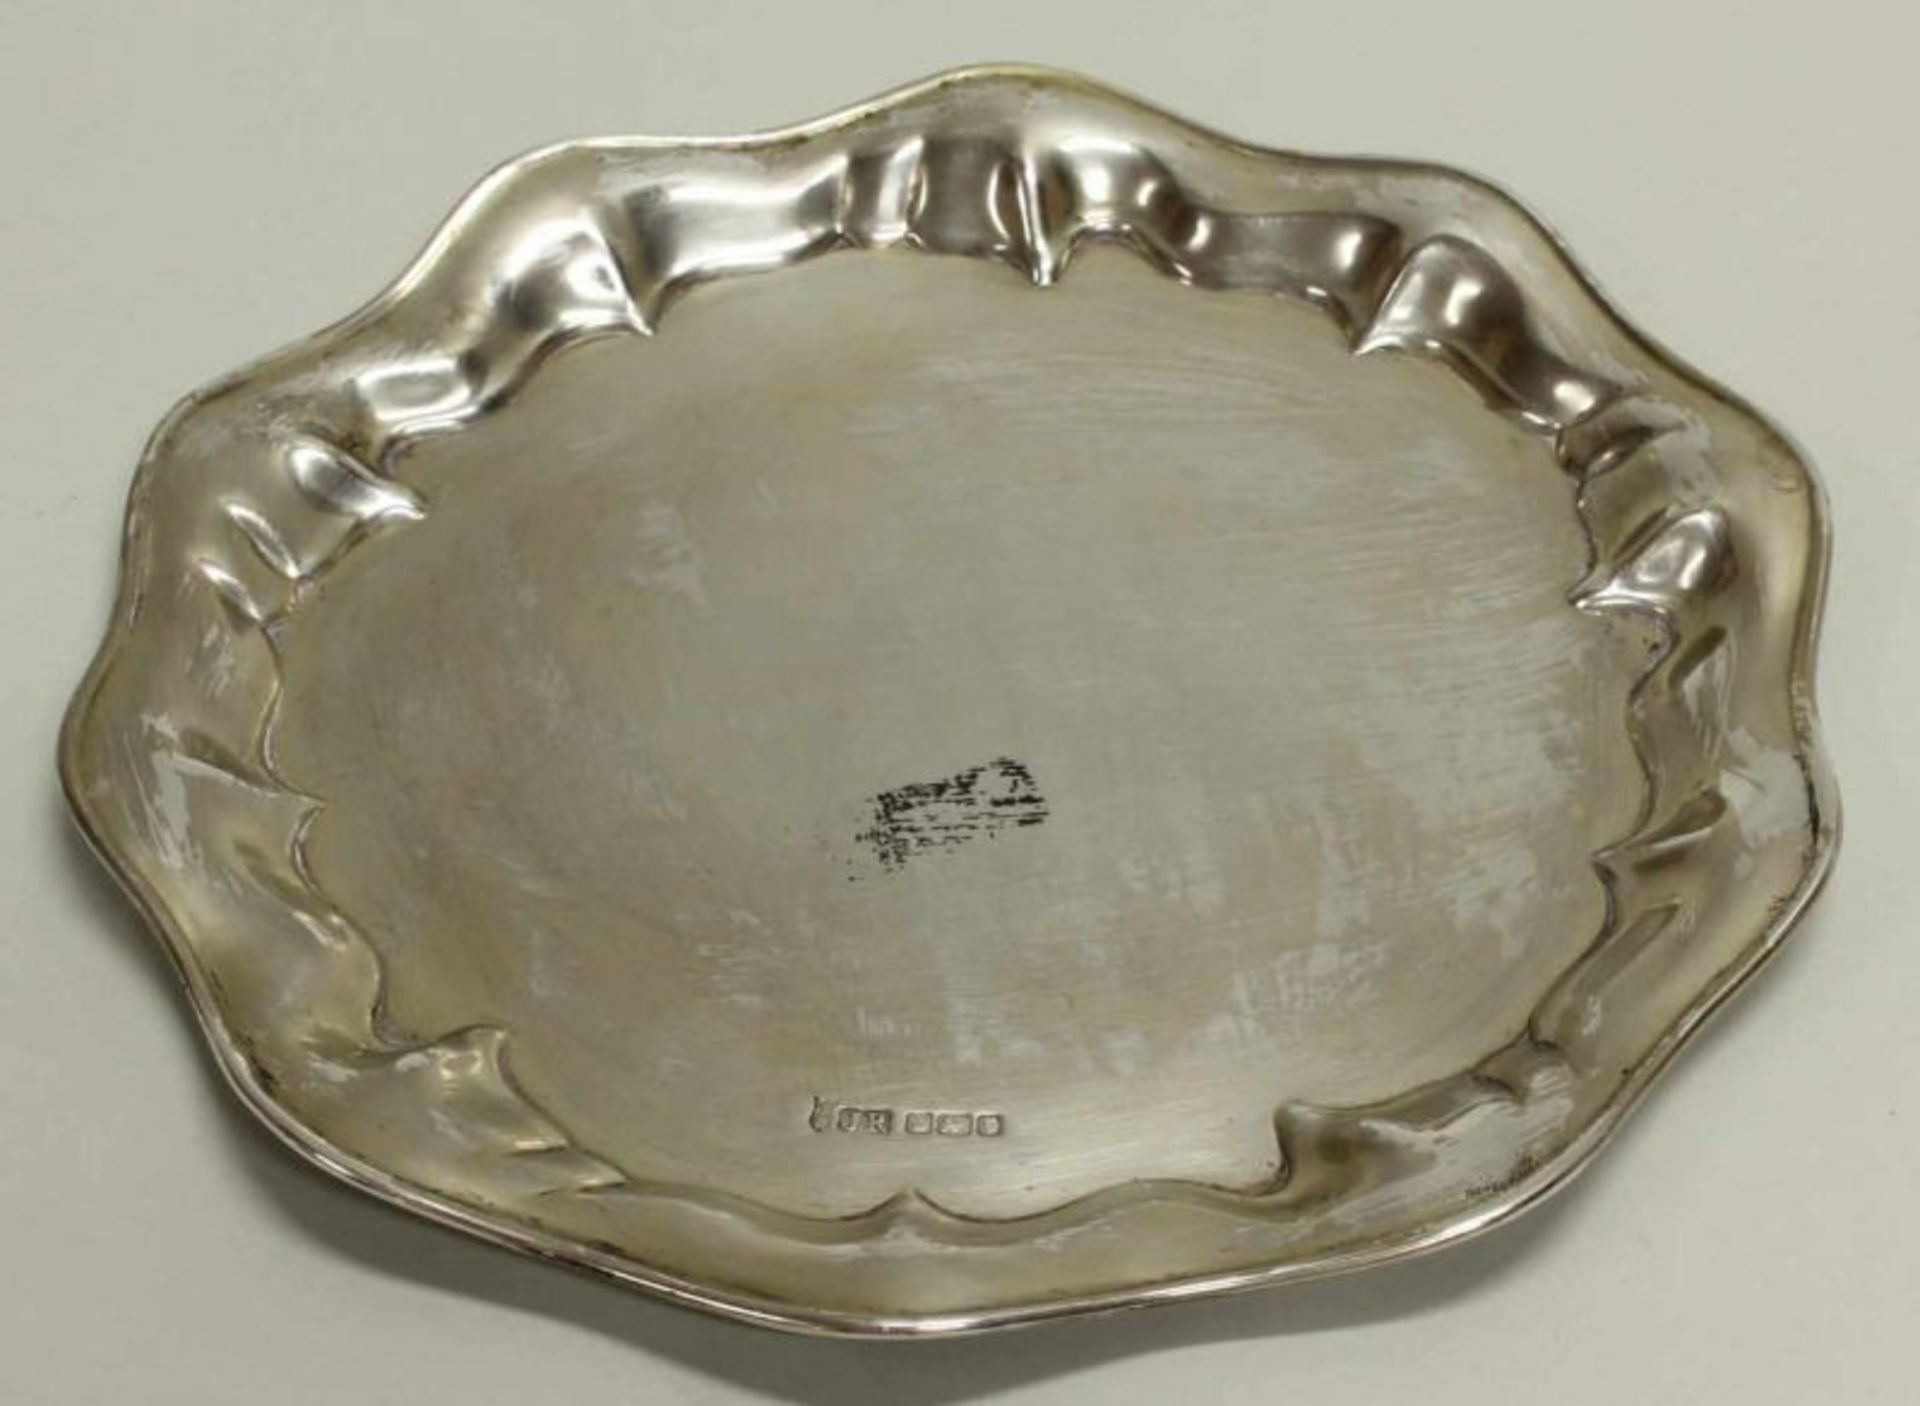 Teller, Silber 925, Sheffield, 1909, Joseph Rodgers & Sons, ø 21.3 cm, ca. 259 g 20.00 % buyer's